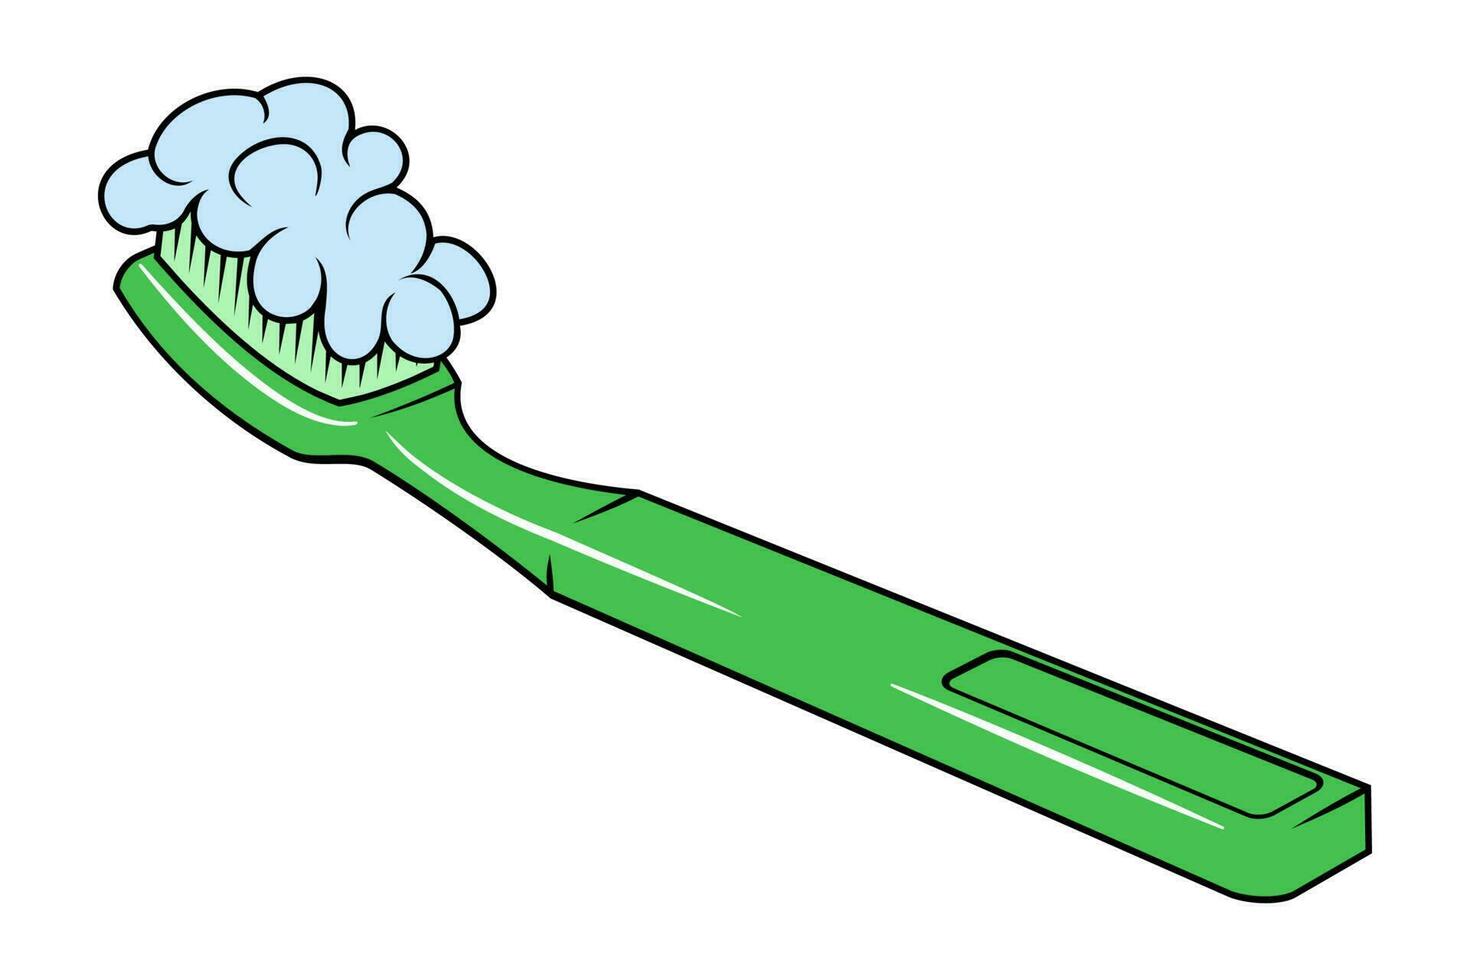 sencillo dibujos animados cepillo de dientes con pasta dental. vector clipart aislado en blanco.